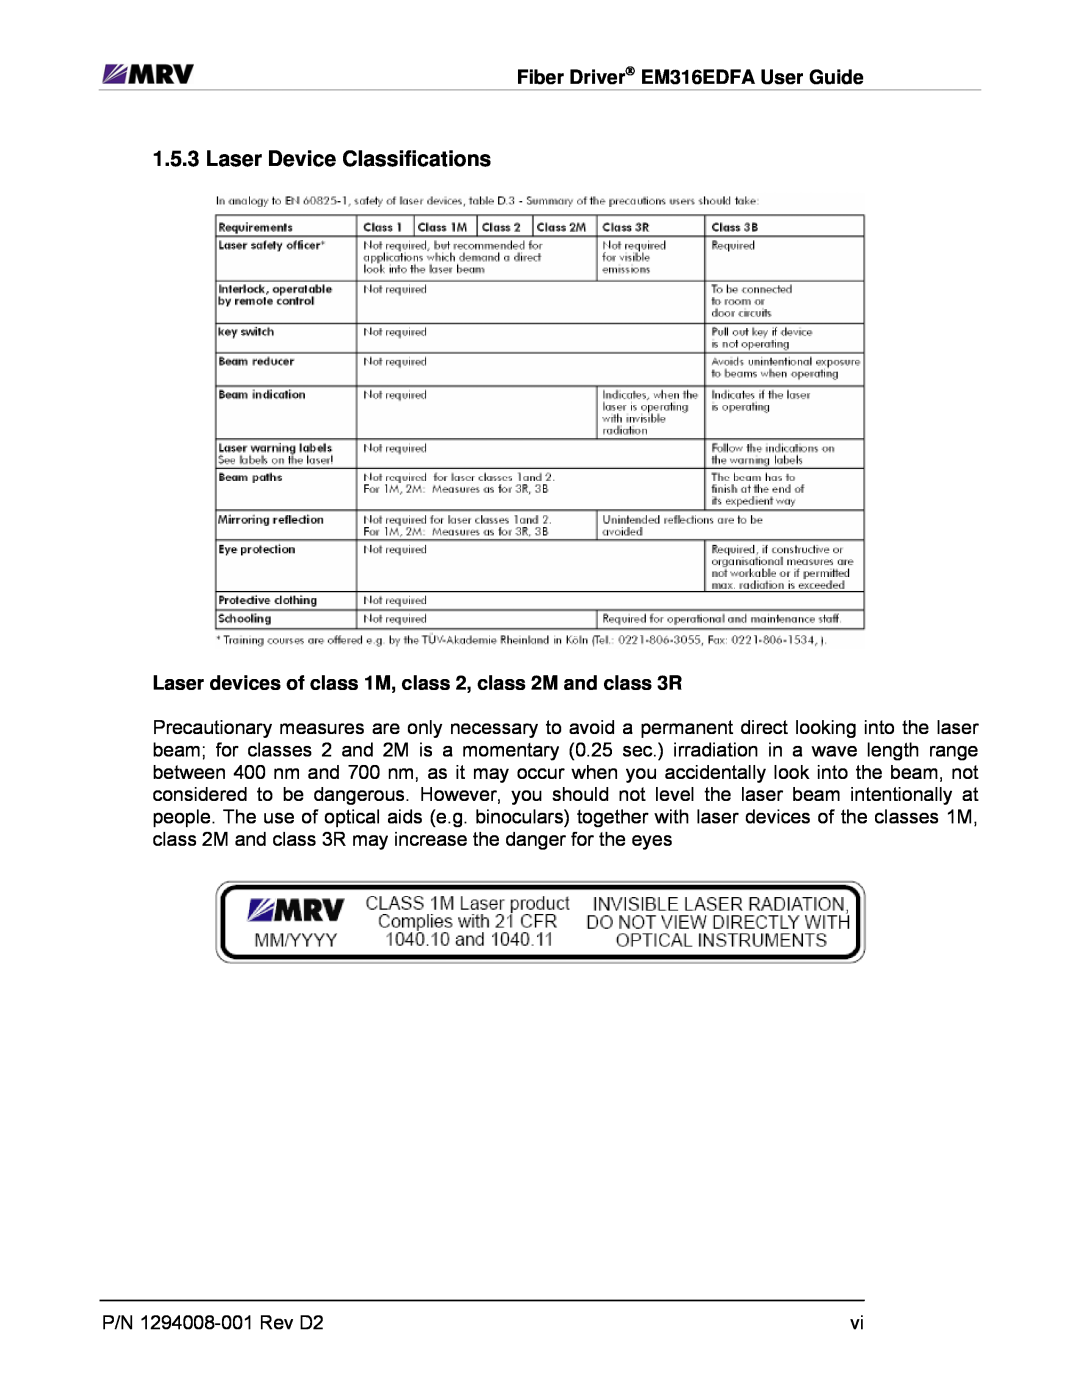 MRV Communications EM316EDFA-LPR, EM316EDFA-BR manual Laser Device Classifications, Fiber Driver EM316EDFA User Guide 